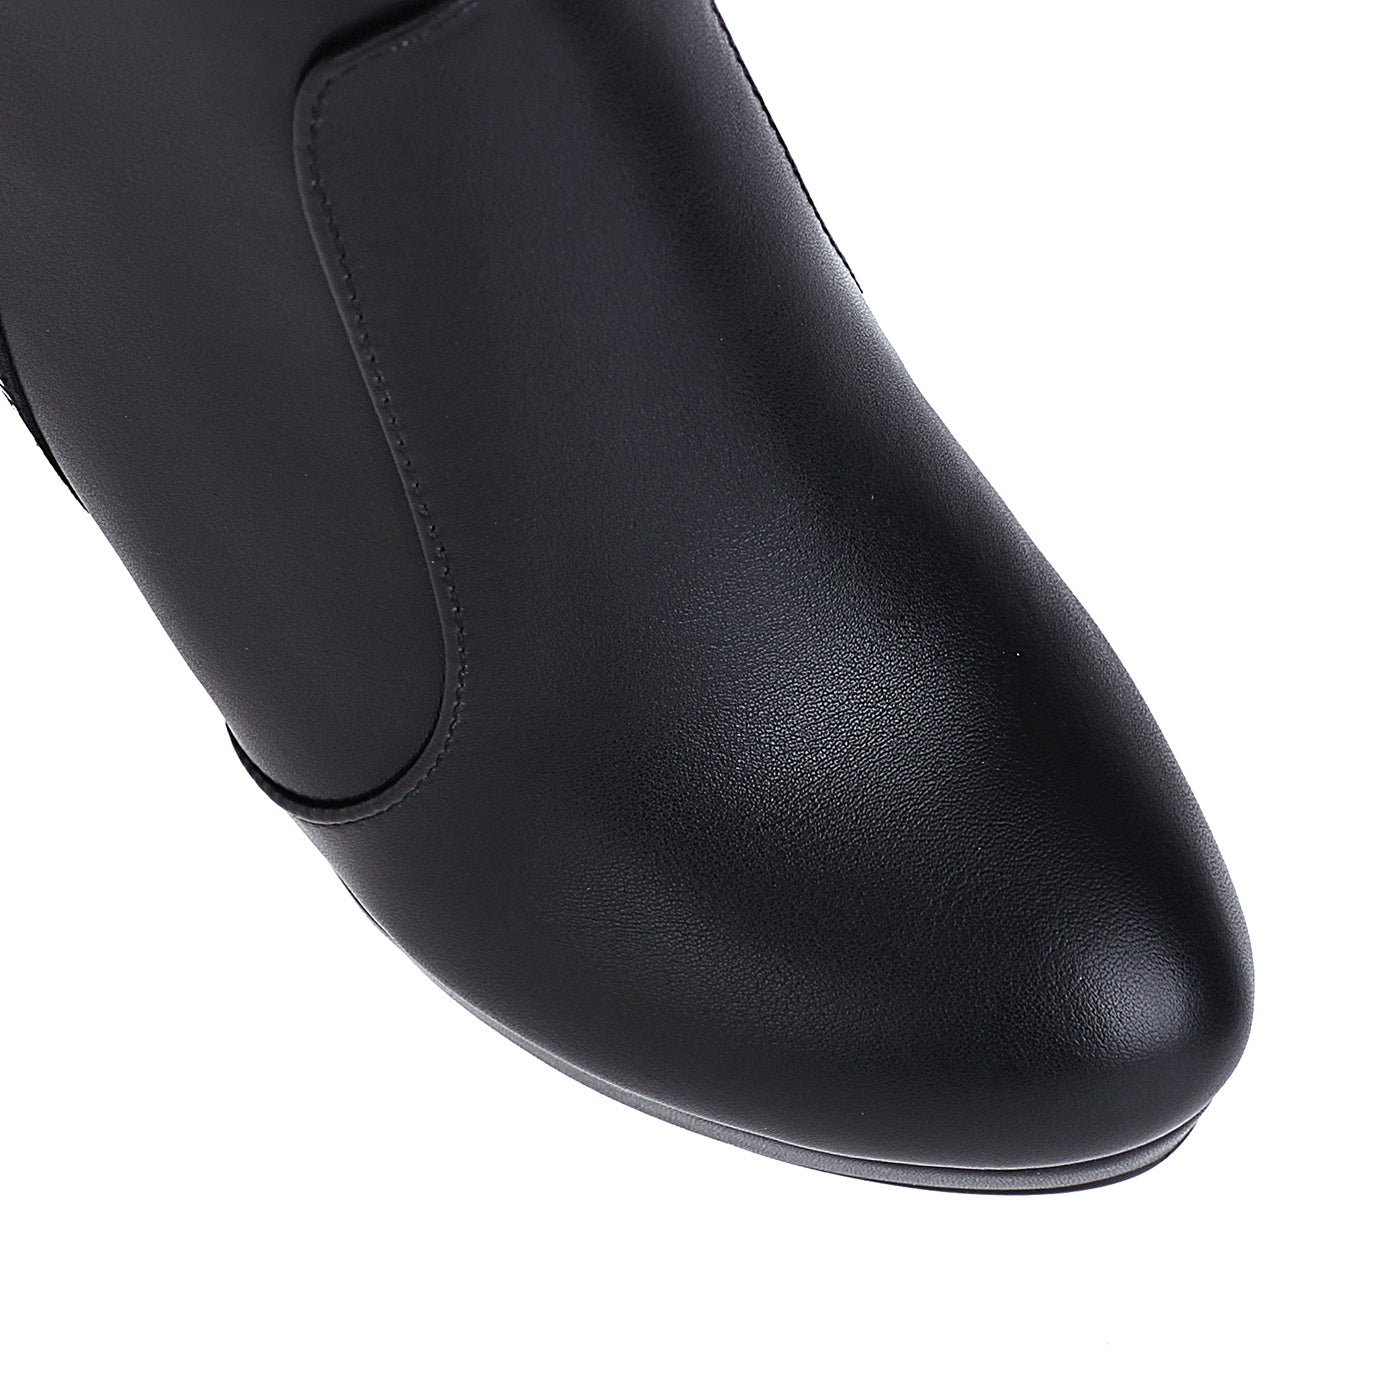 Bigsizeheels All-match stiletto super high-heel platform sexy boots - Black freeshipping - bigsizeheel®-size5-size15 -All Plus Sizes Available!